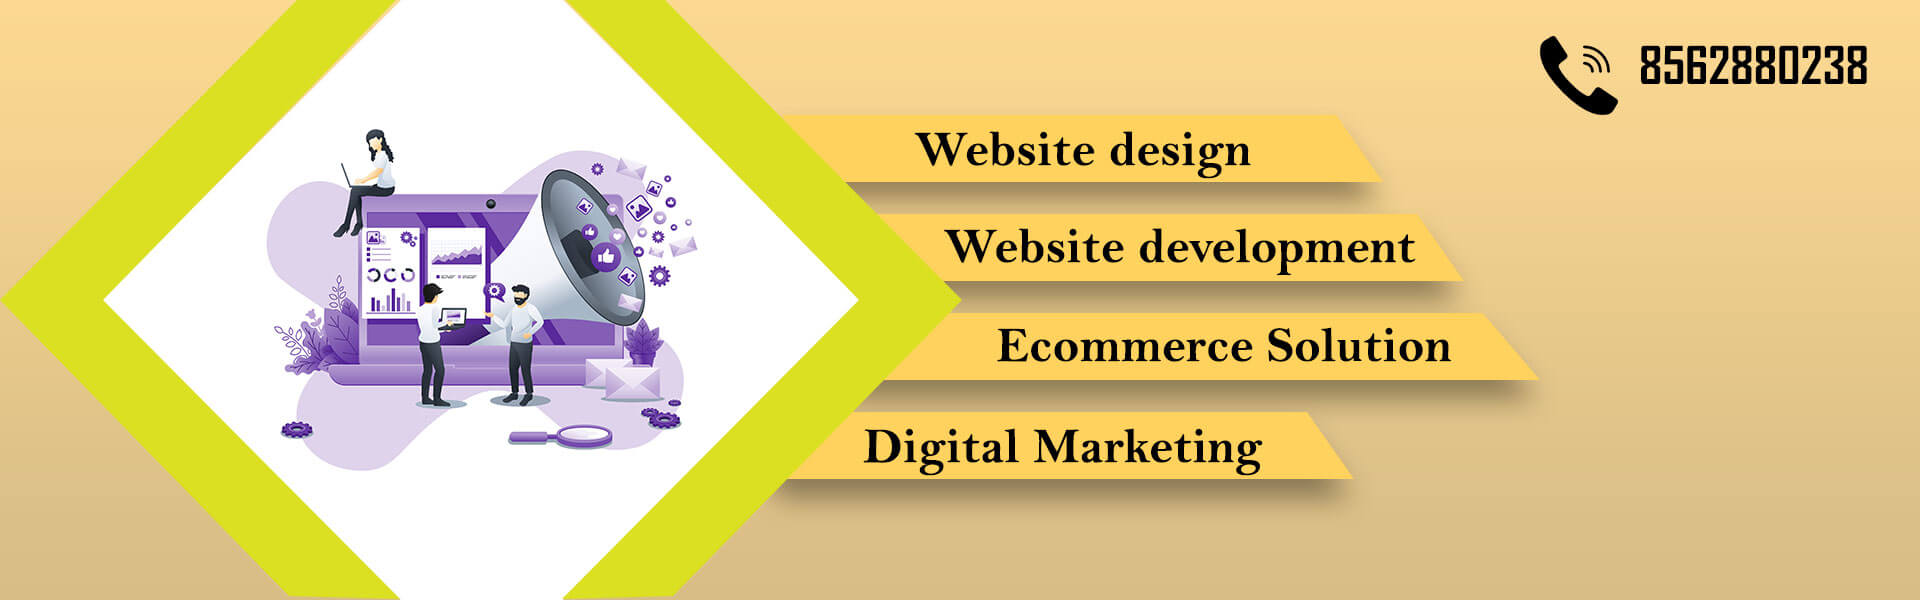 Website-development-company-in-jaipur-65ec0f97